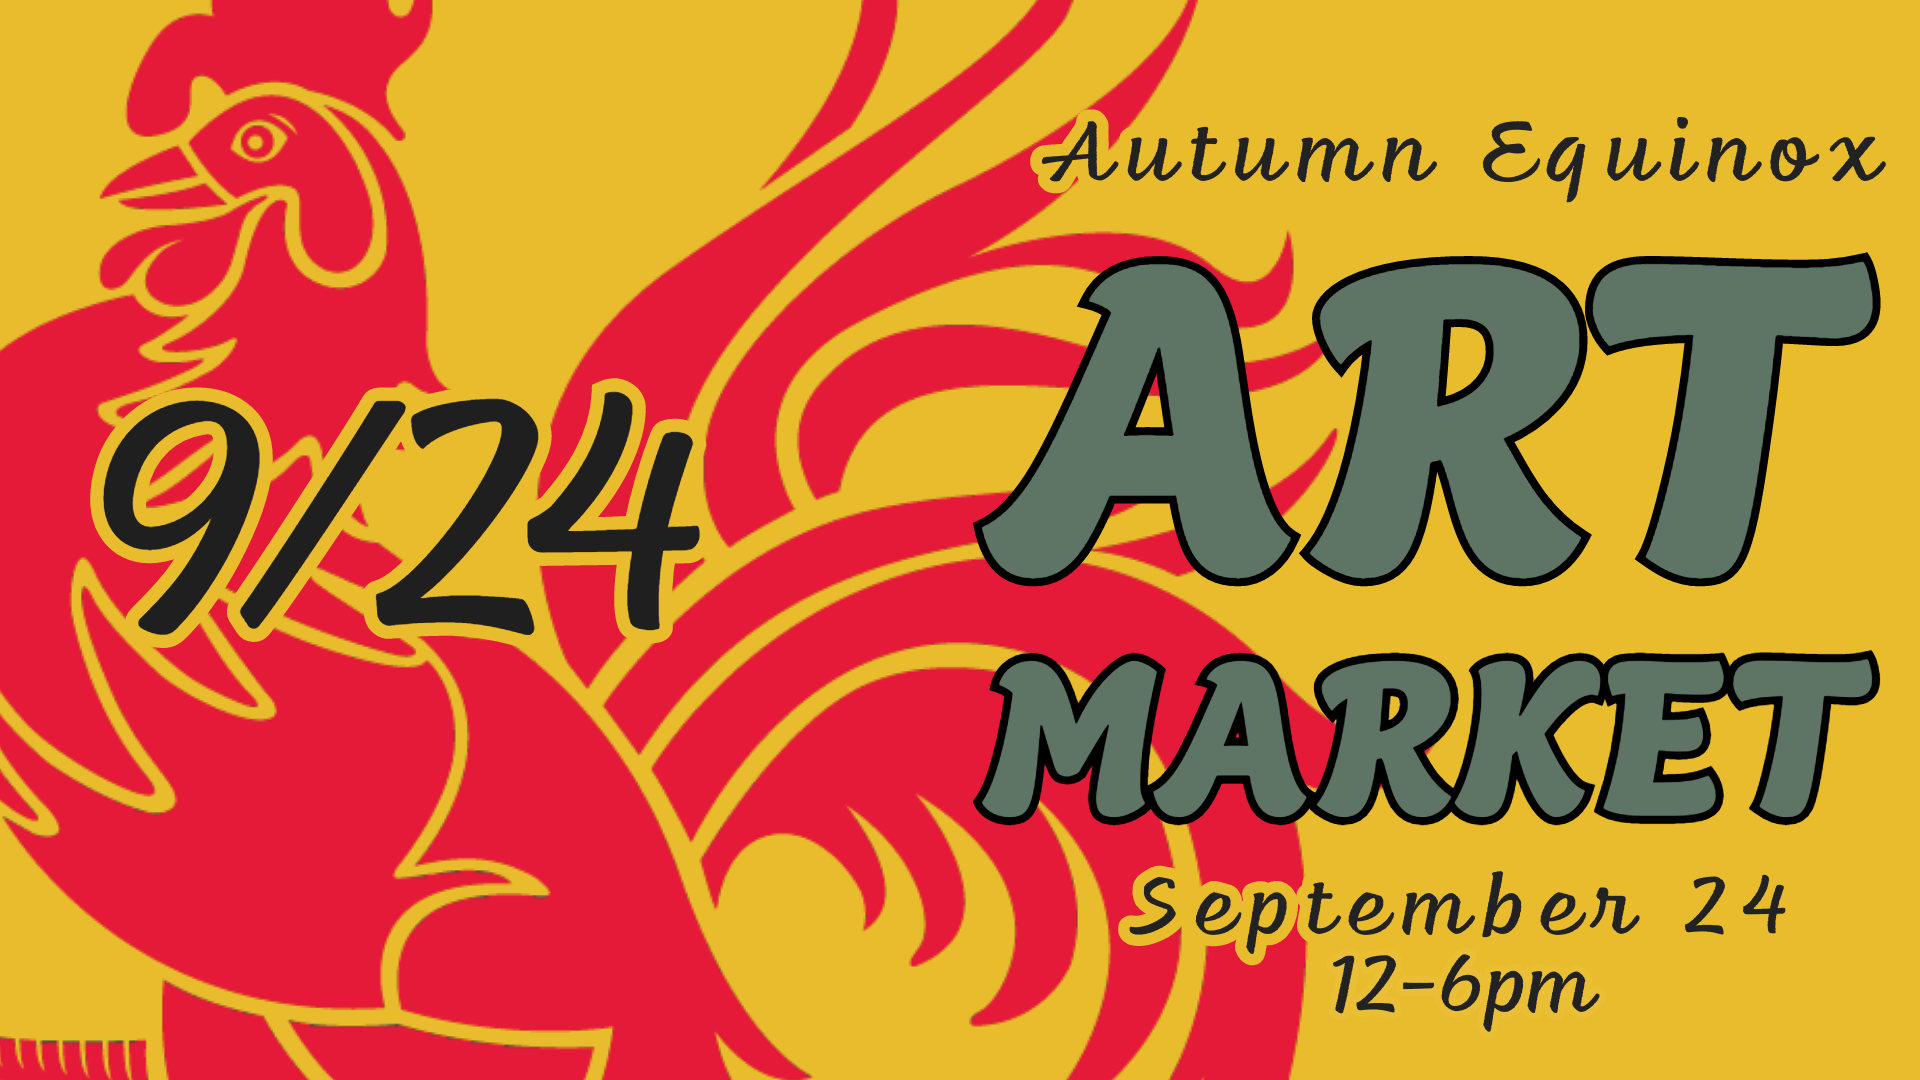 BV Art Market Autumn Equinox event